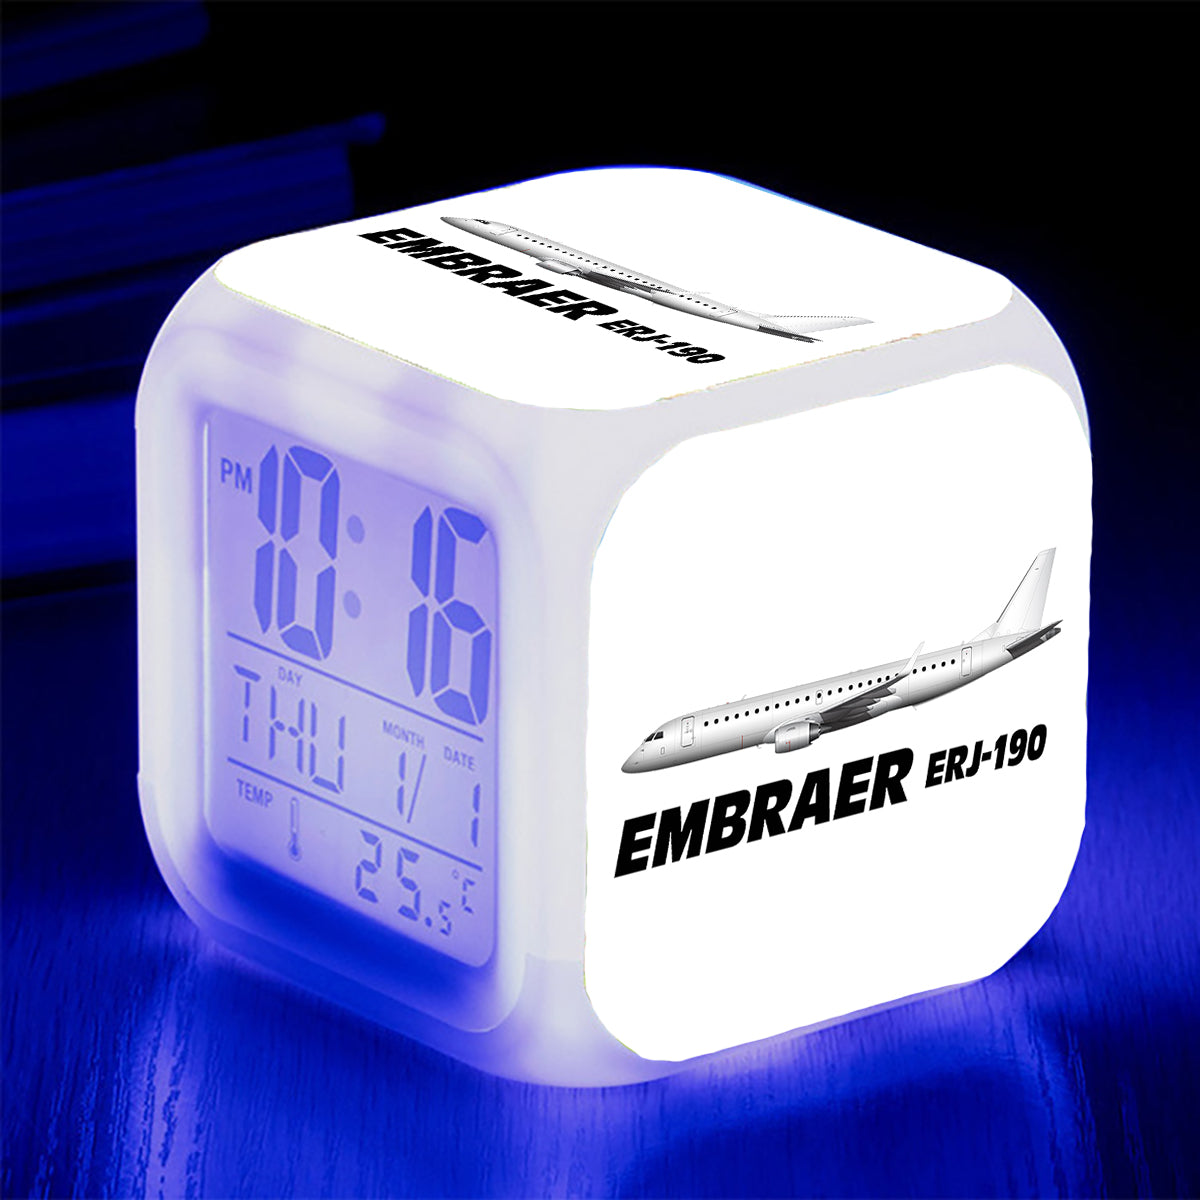 The Embraer ERJ-190 Designed "7 Colour" Digital Alarm Clock